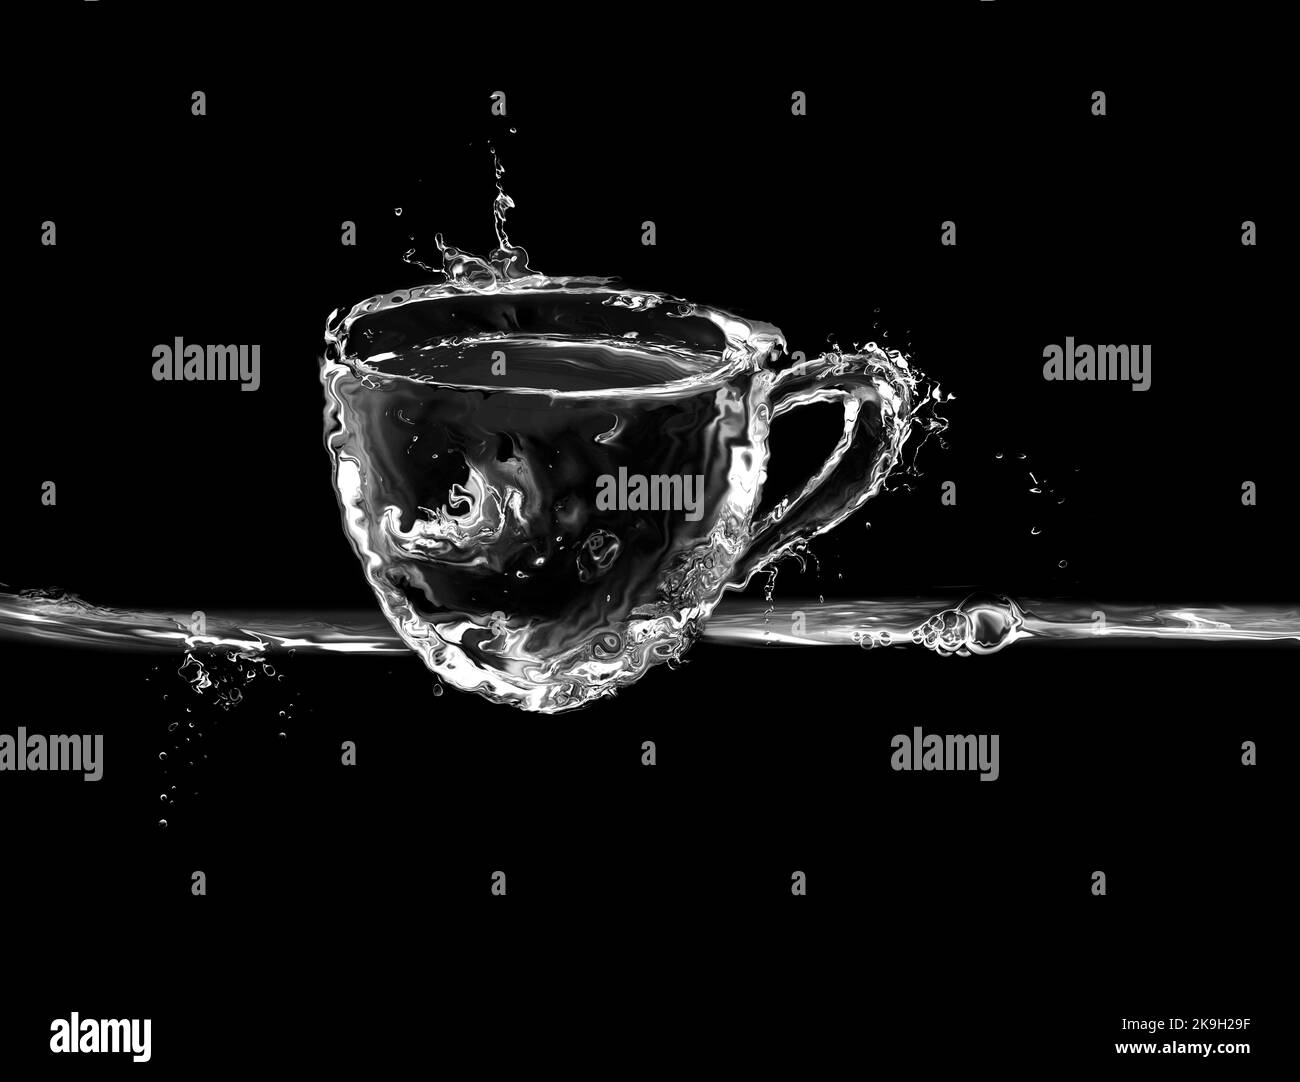 Una tazza di caffè nera fatta di acqua. Foto Stock